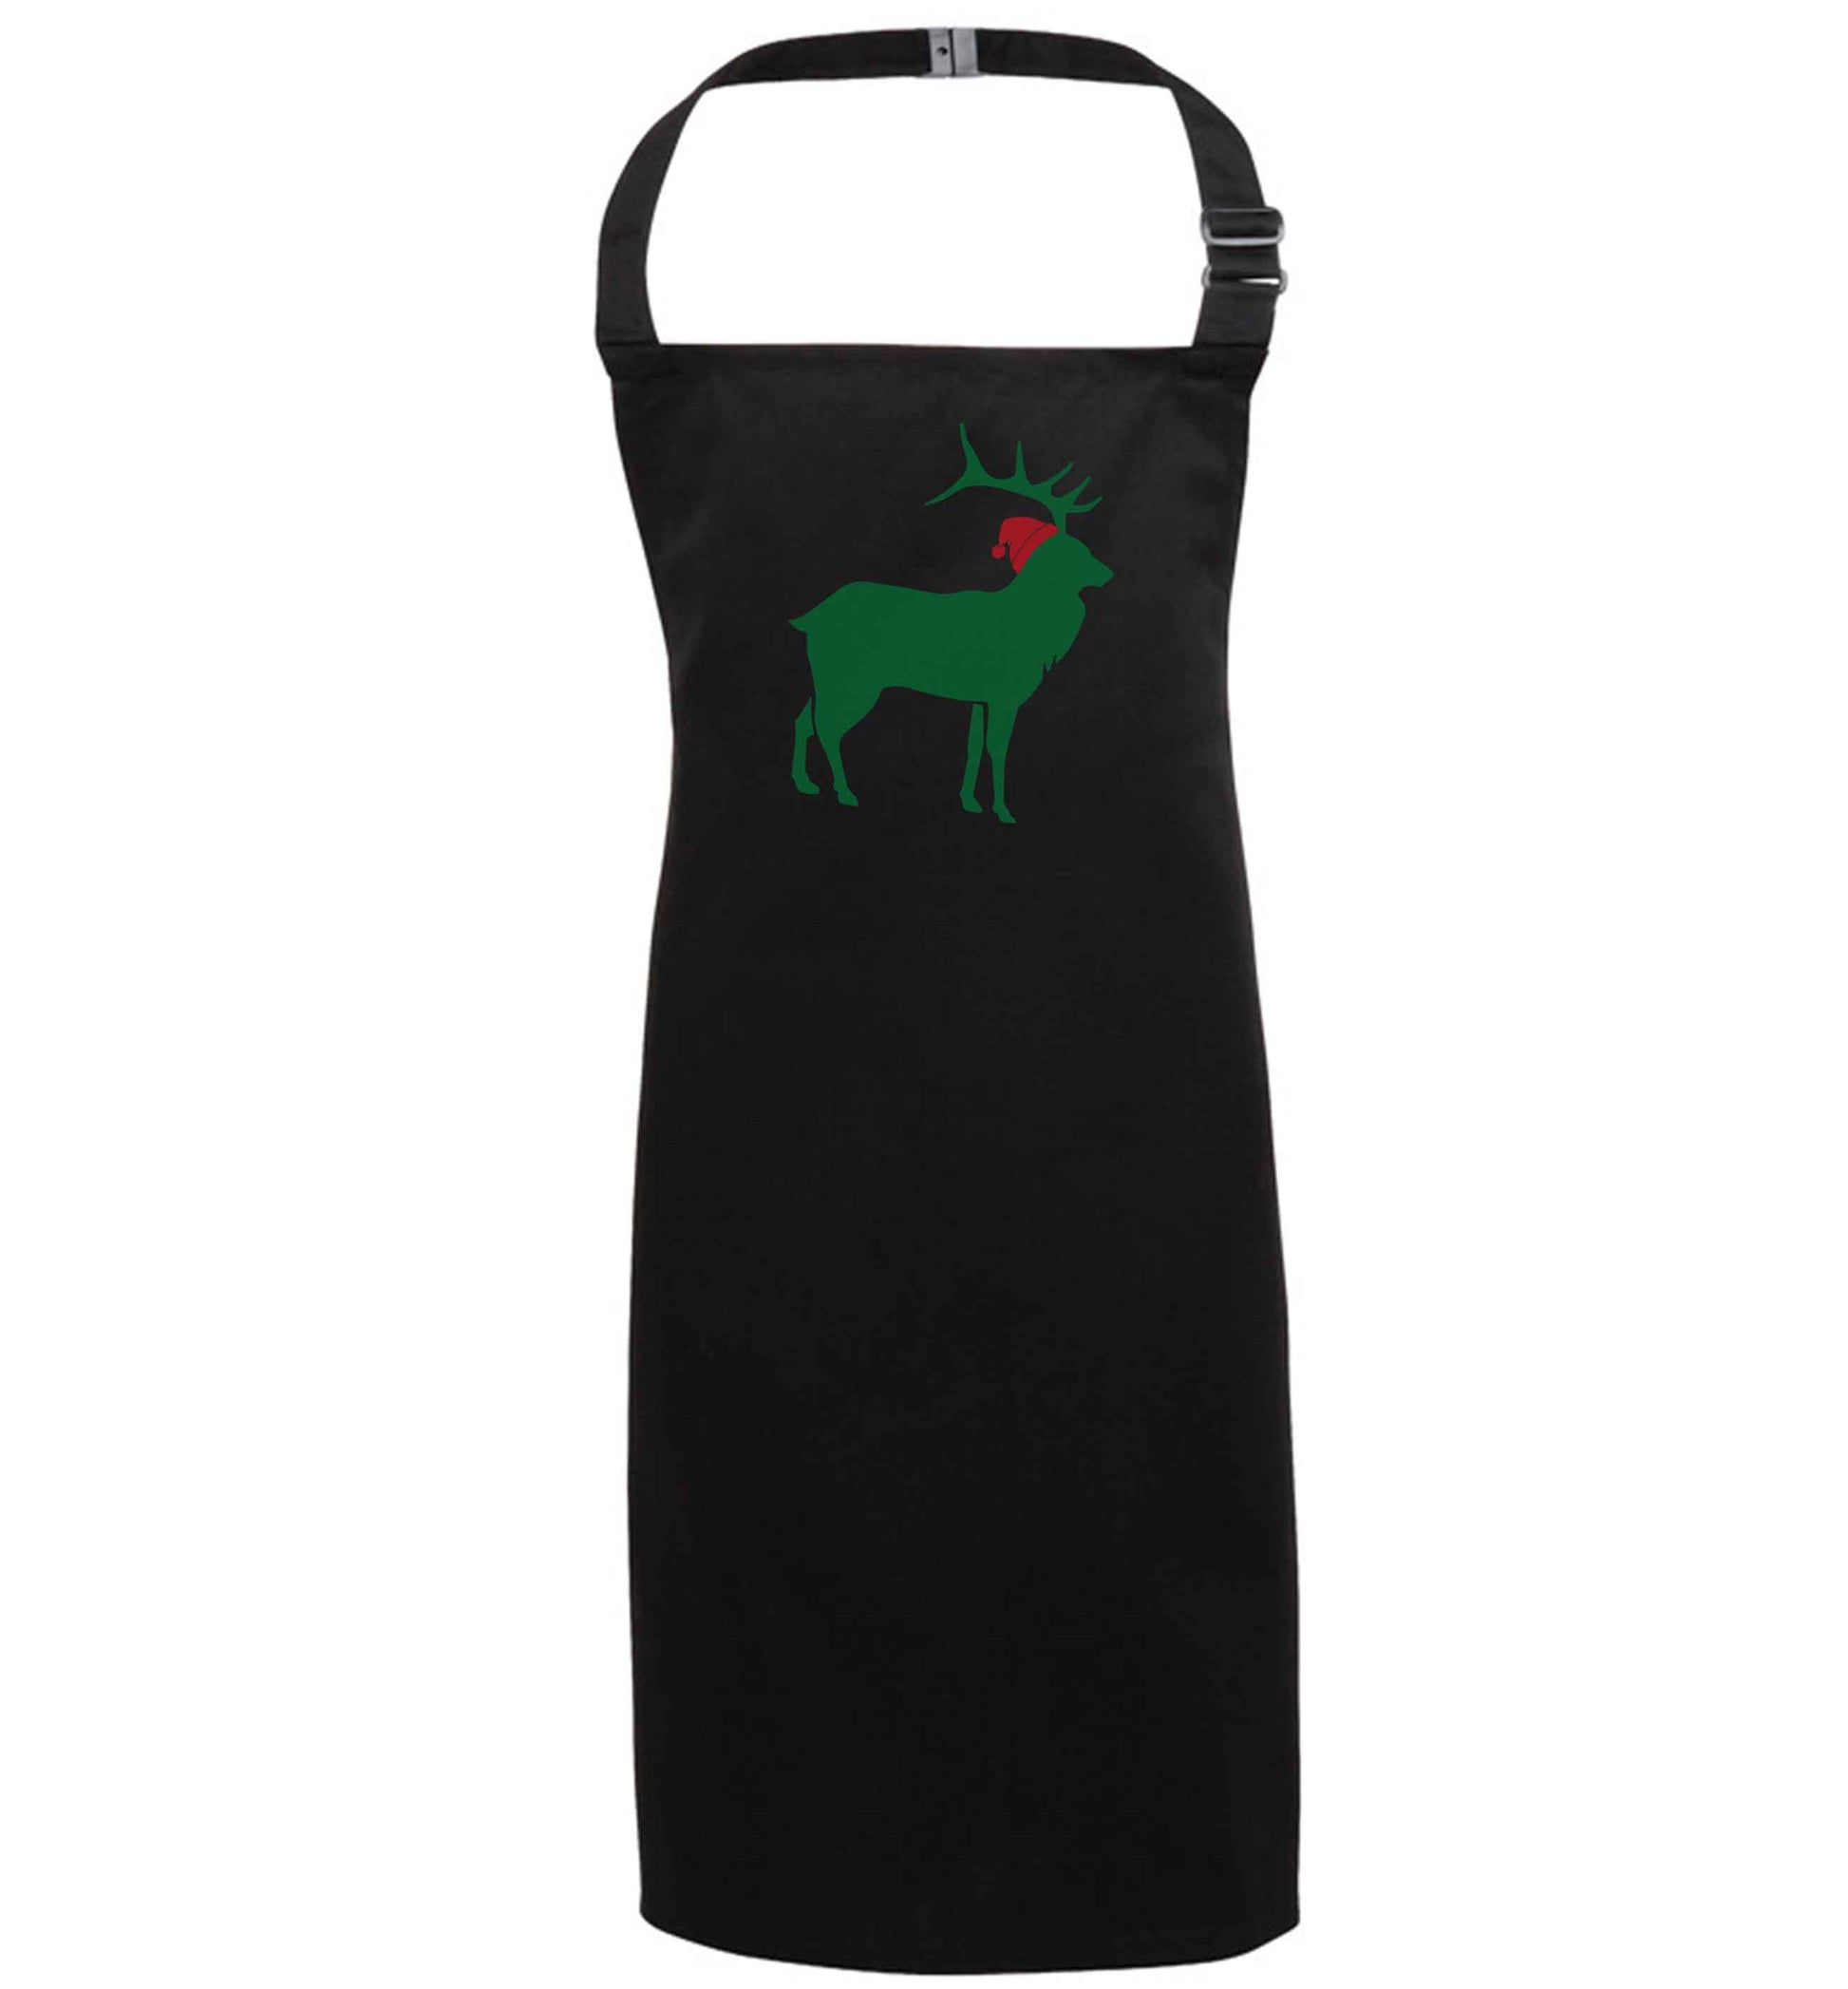 Green stag Santa black apron 7-10 years